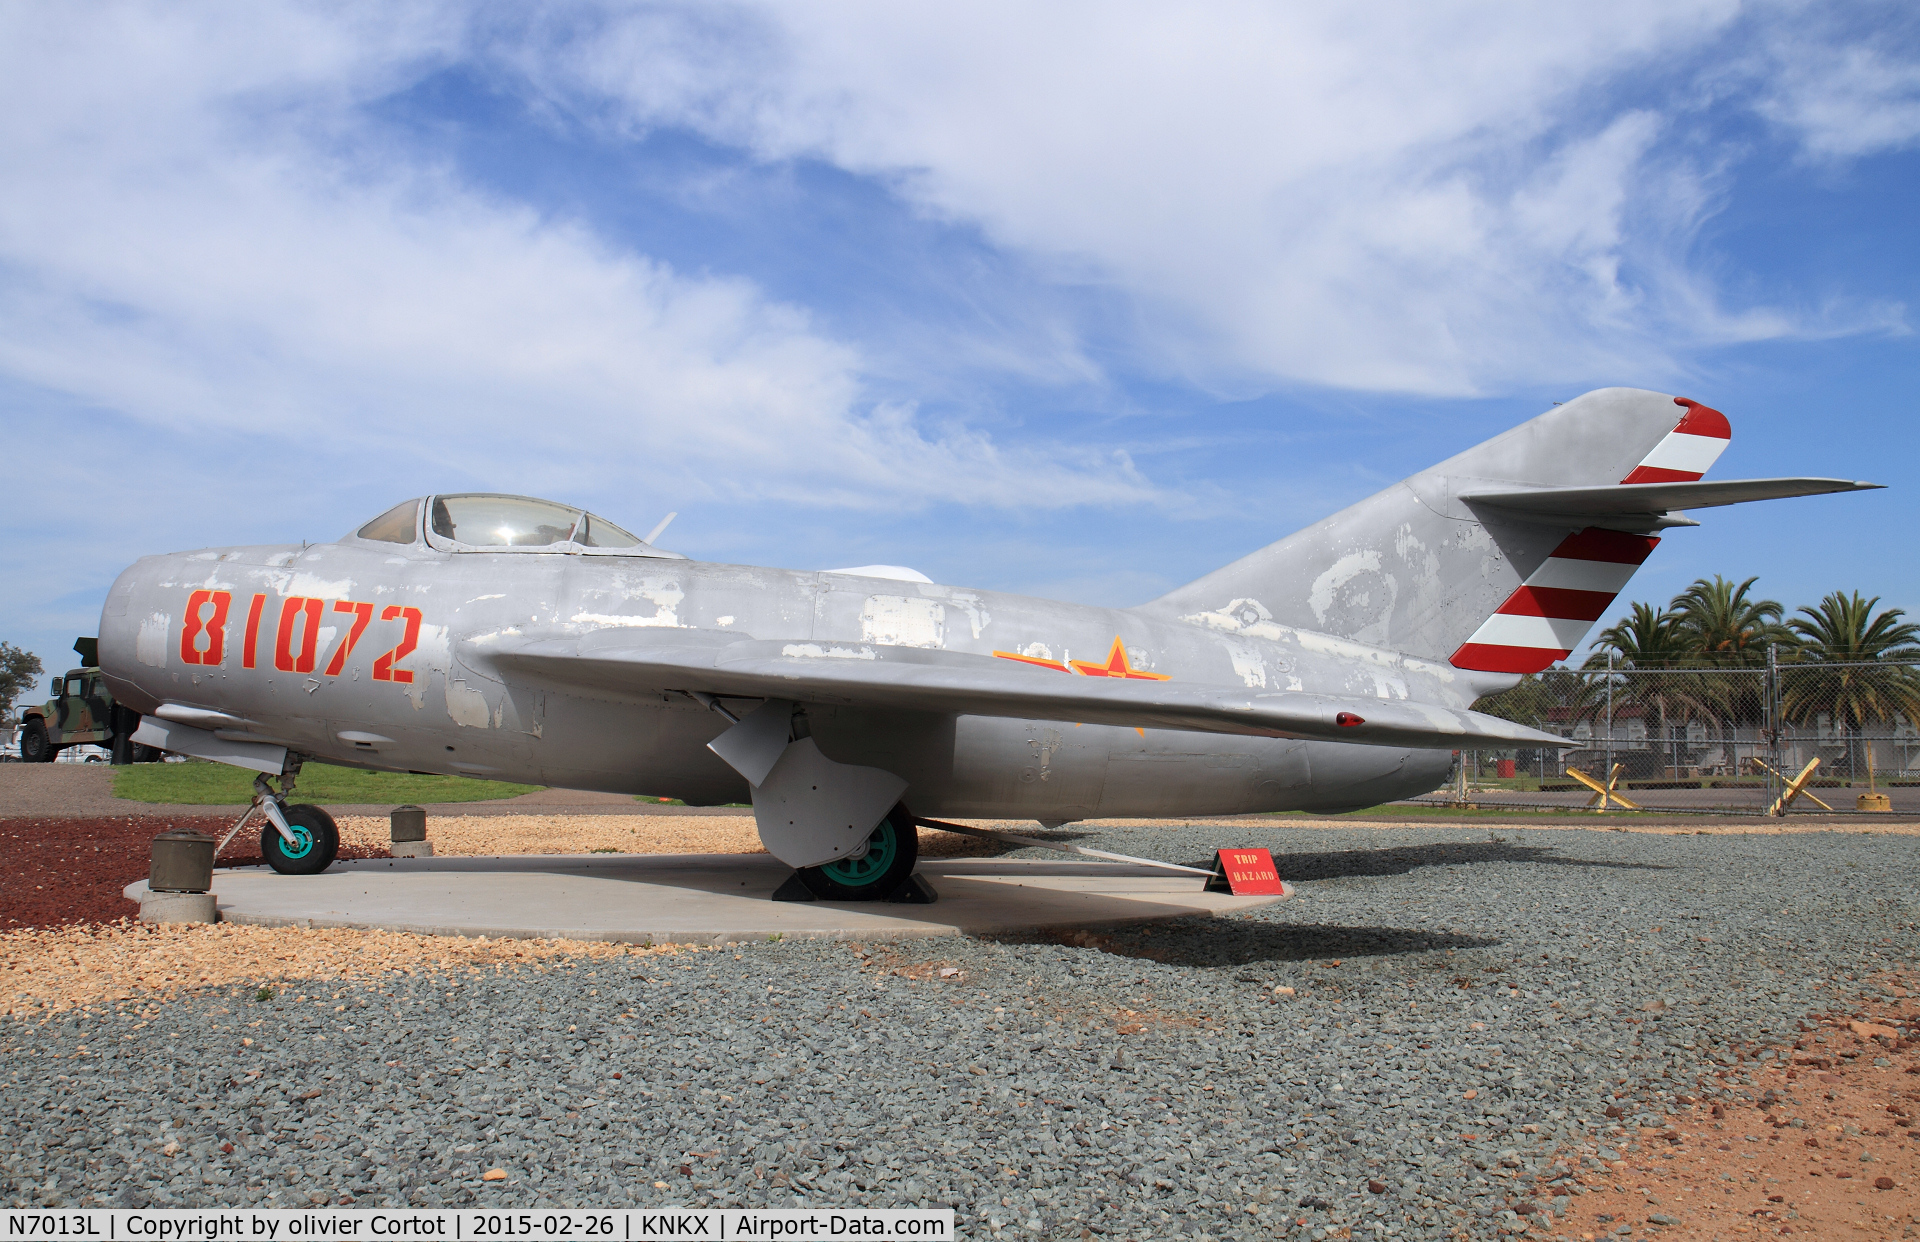 N7013L, Mikoyan-Gurevich MiG-15bis C/N 81072, Miramar museum